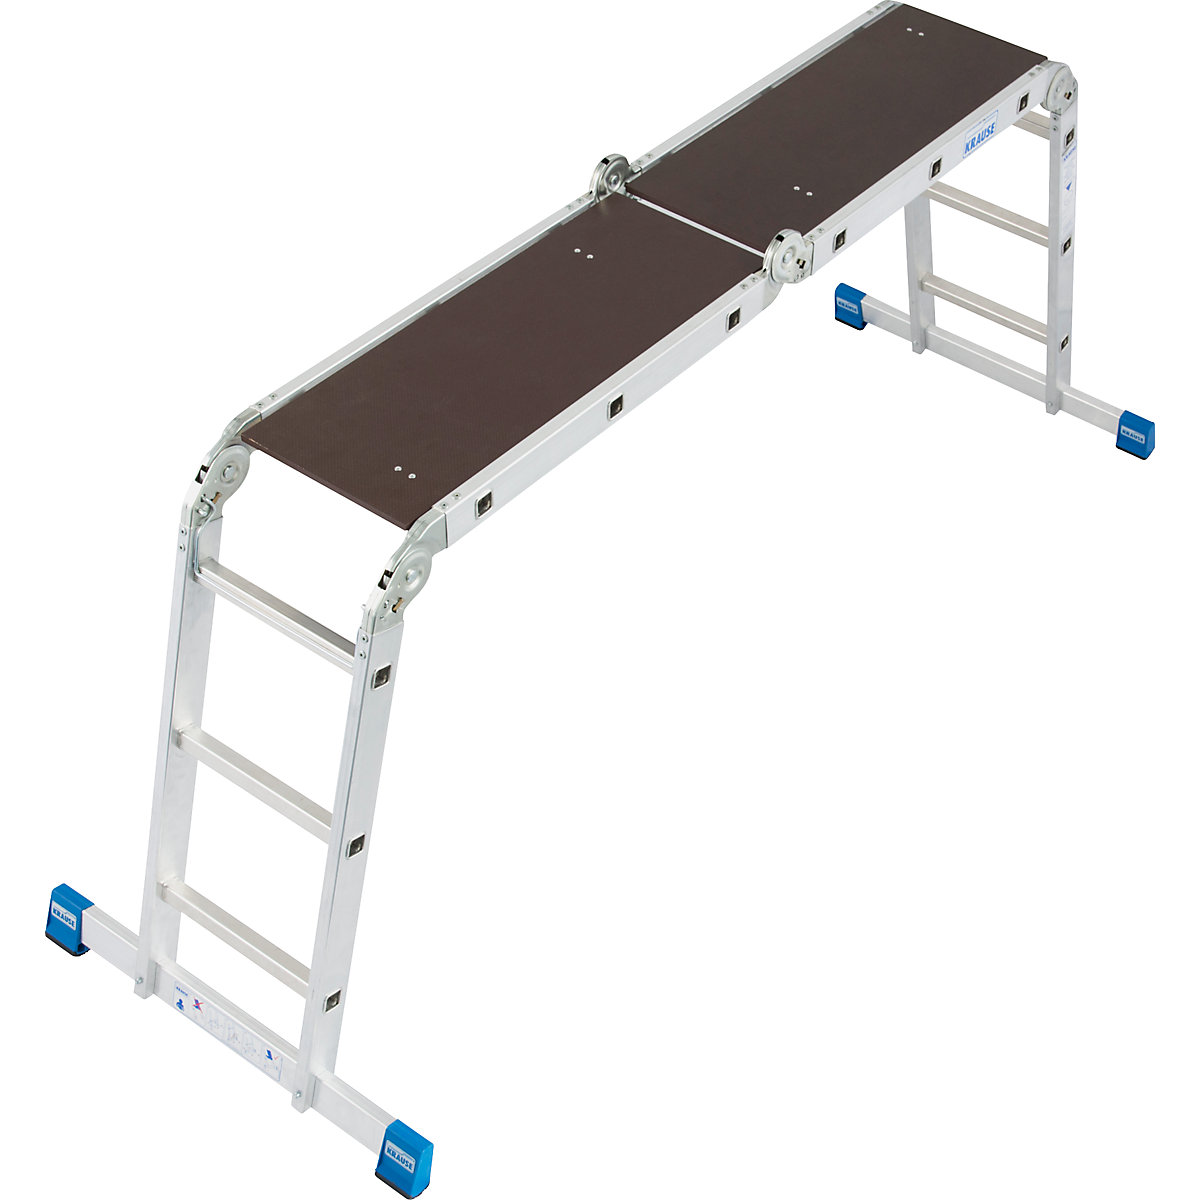 STABILO hinged multipurpose ladder - KRAUSE